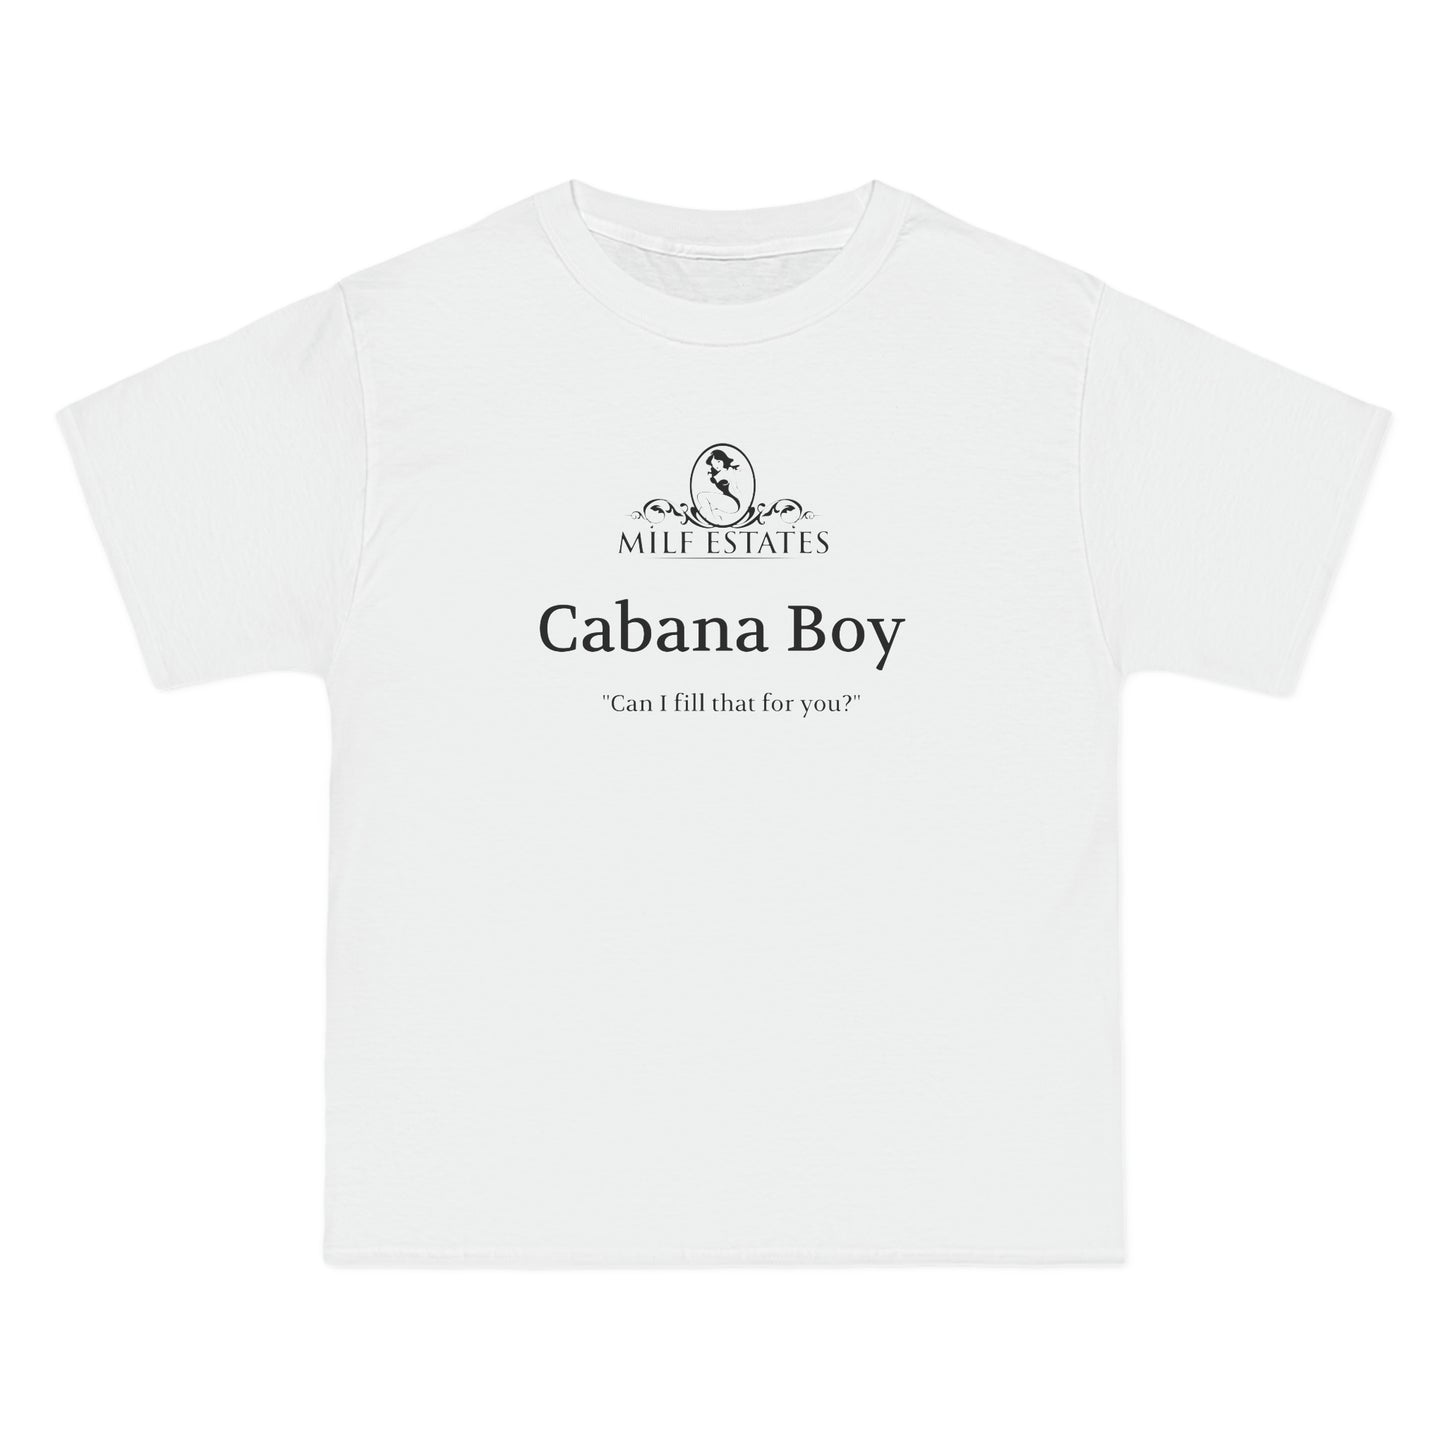 MILF ESTATES Logo- Cabana Boy   "Can I fill that for you?"  (Logo)